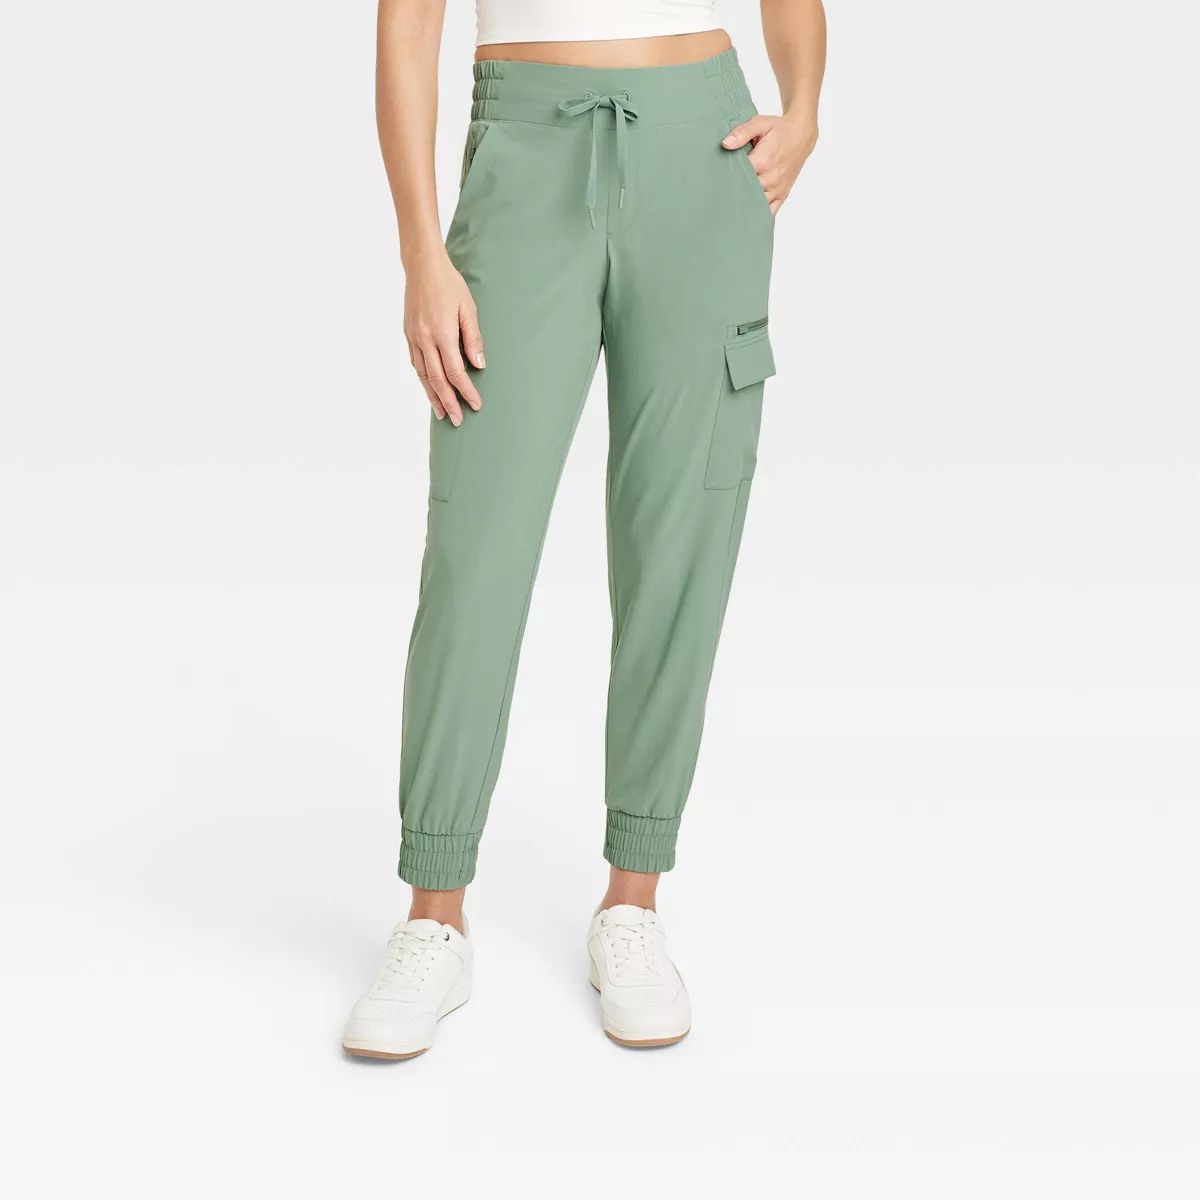 Model wearing the green pants